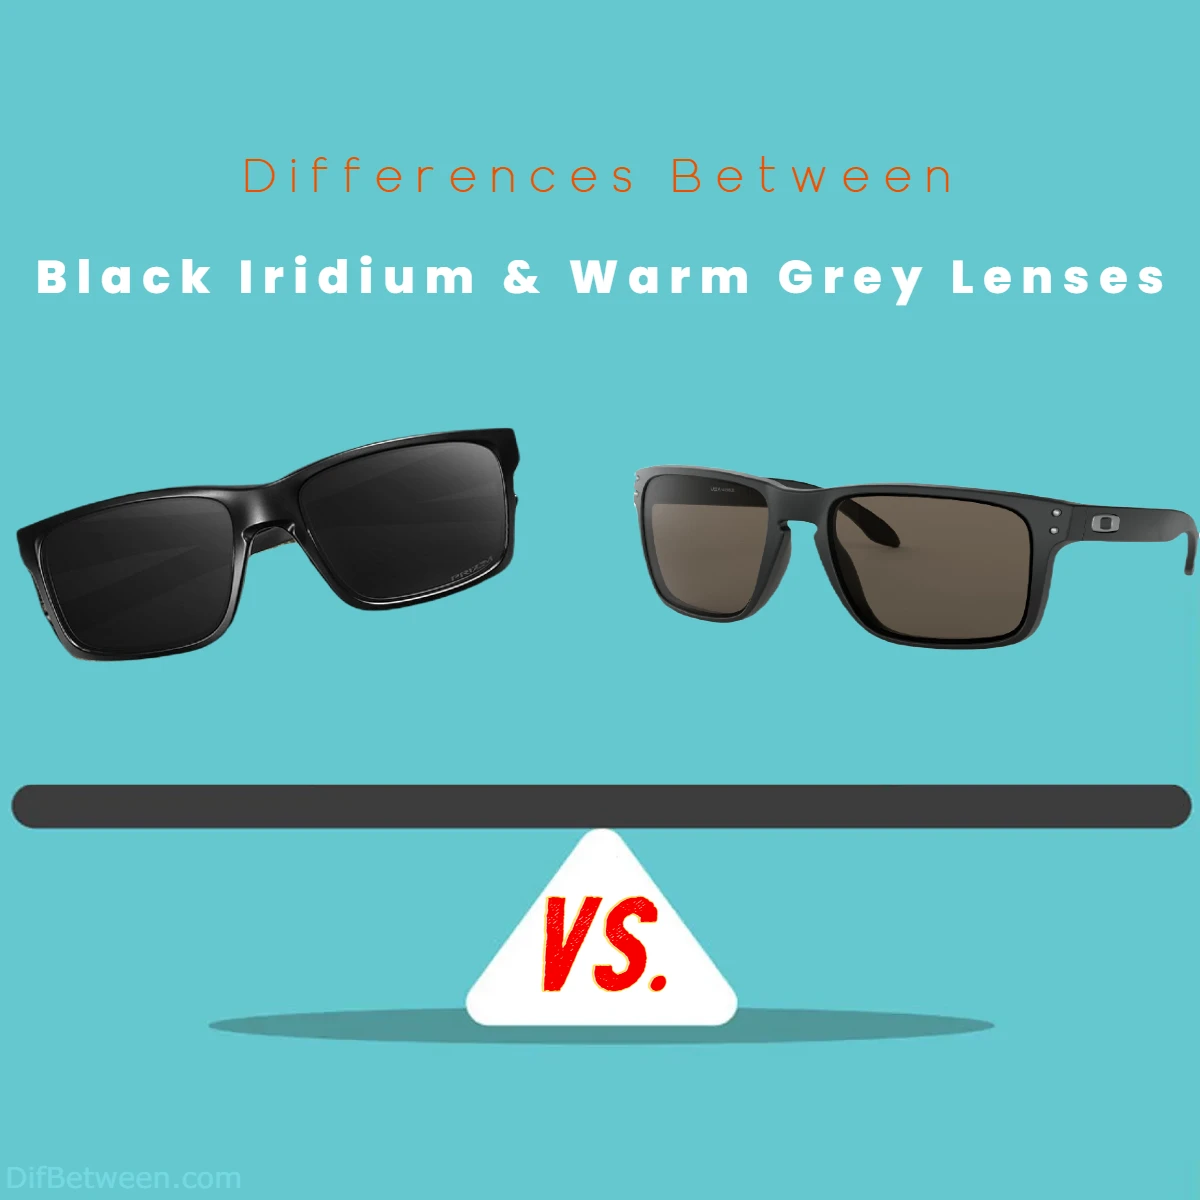 Differences Between Black Iridium vs Warm Grey Lenses